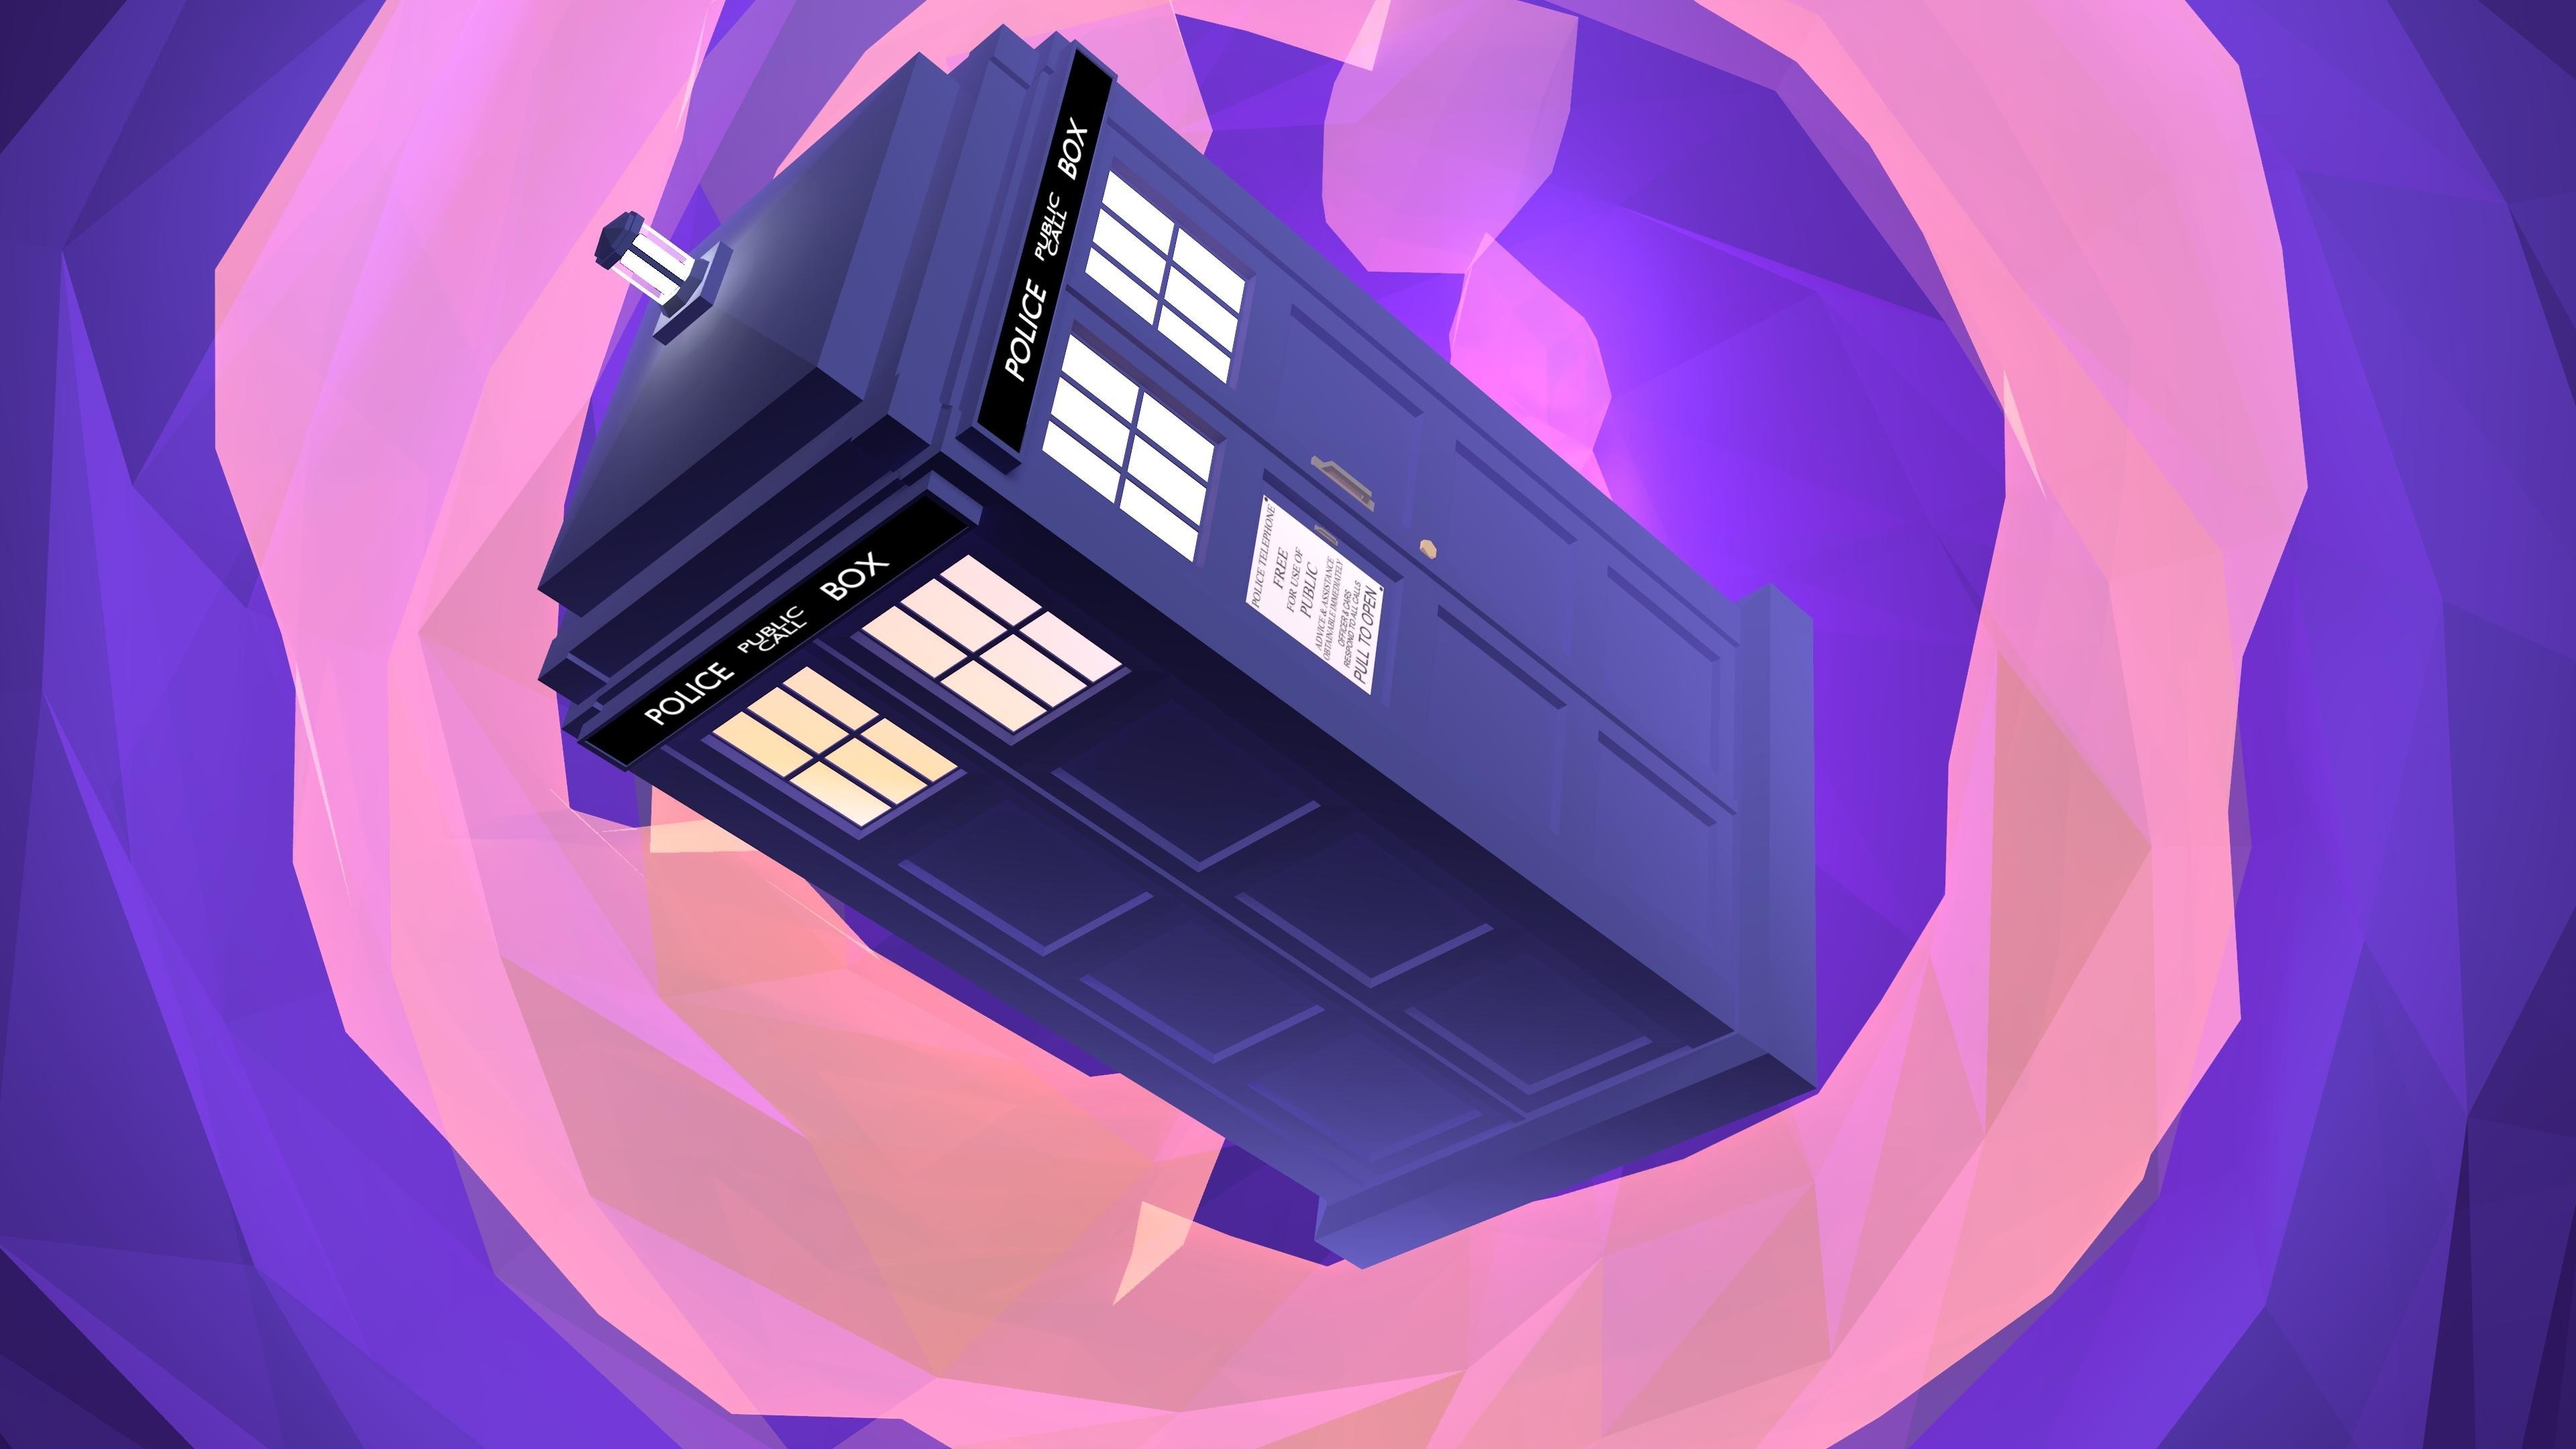 Doctor Who, TARDIS, Artwork, Digital art Wallpaper